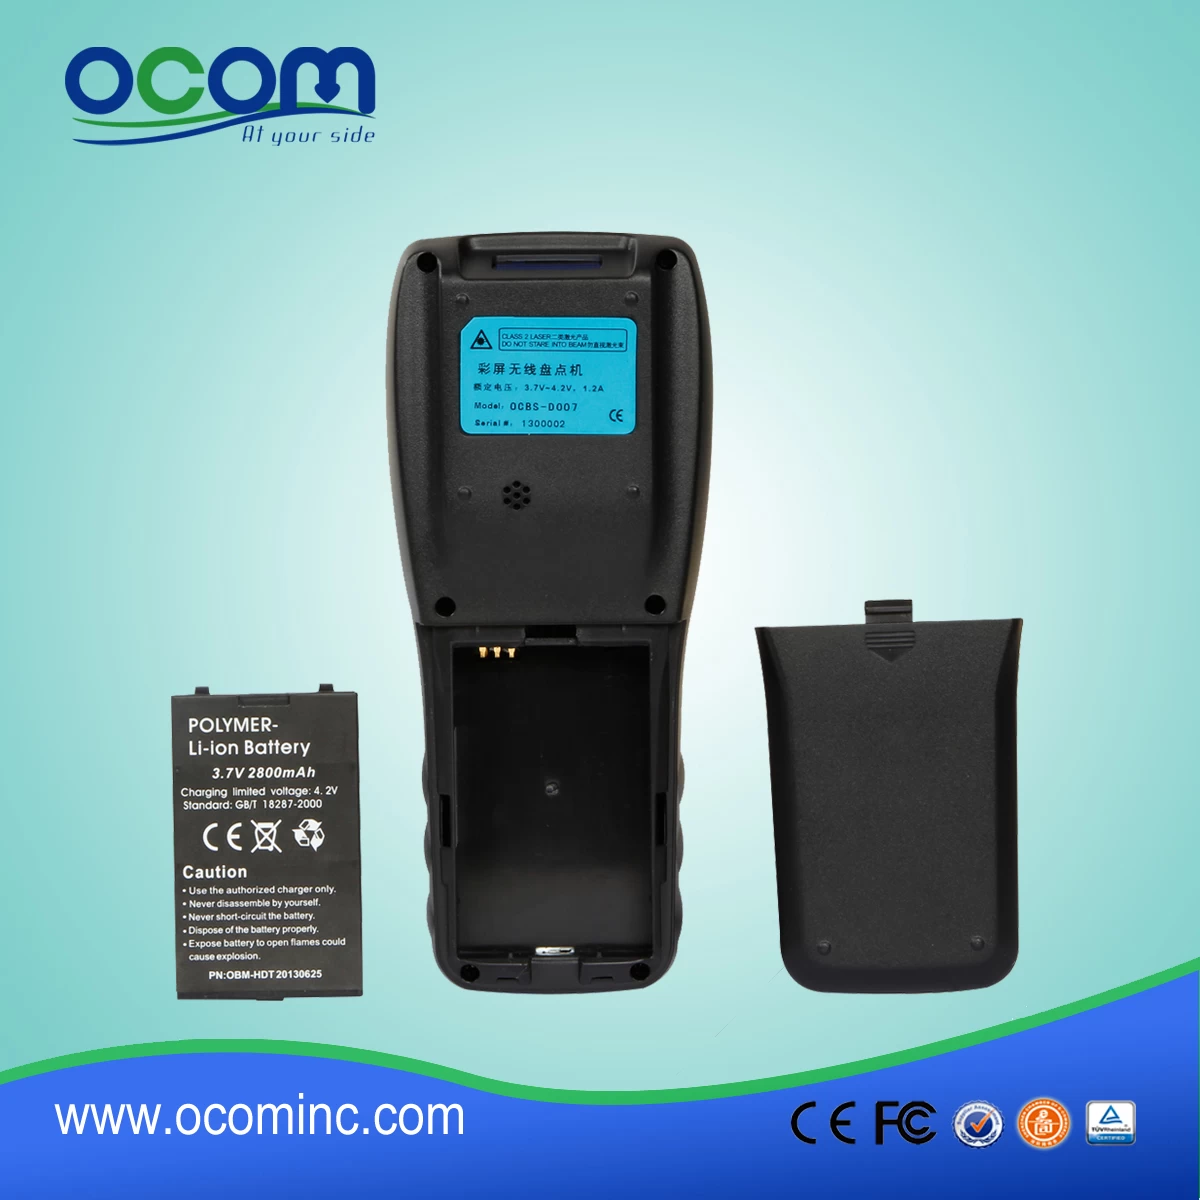 (OCBS-D007) RF433 MHz Wireless Portable Stocktaking Terminal Industrial PDA